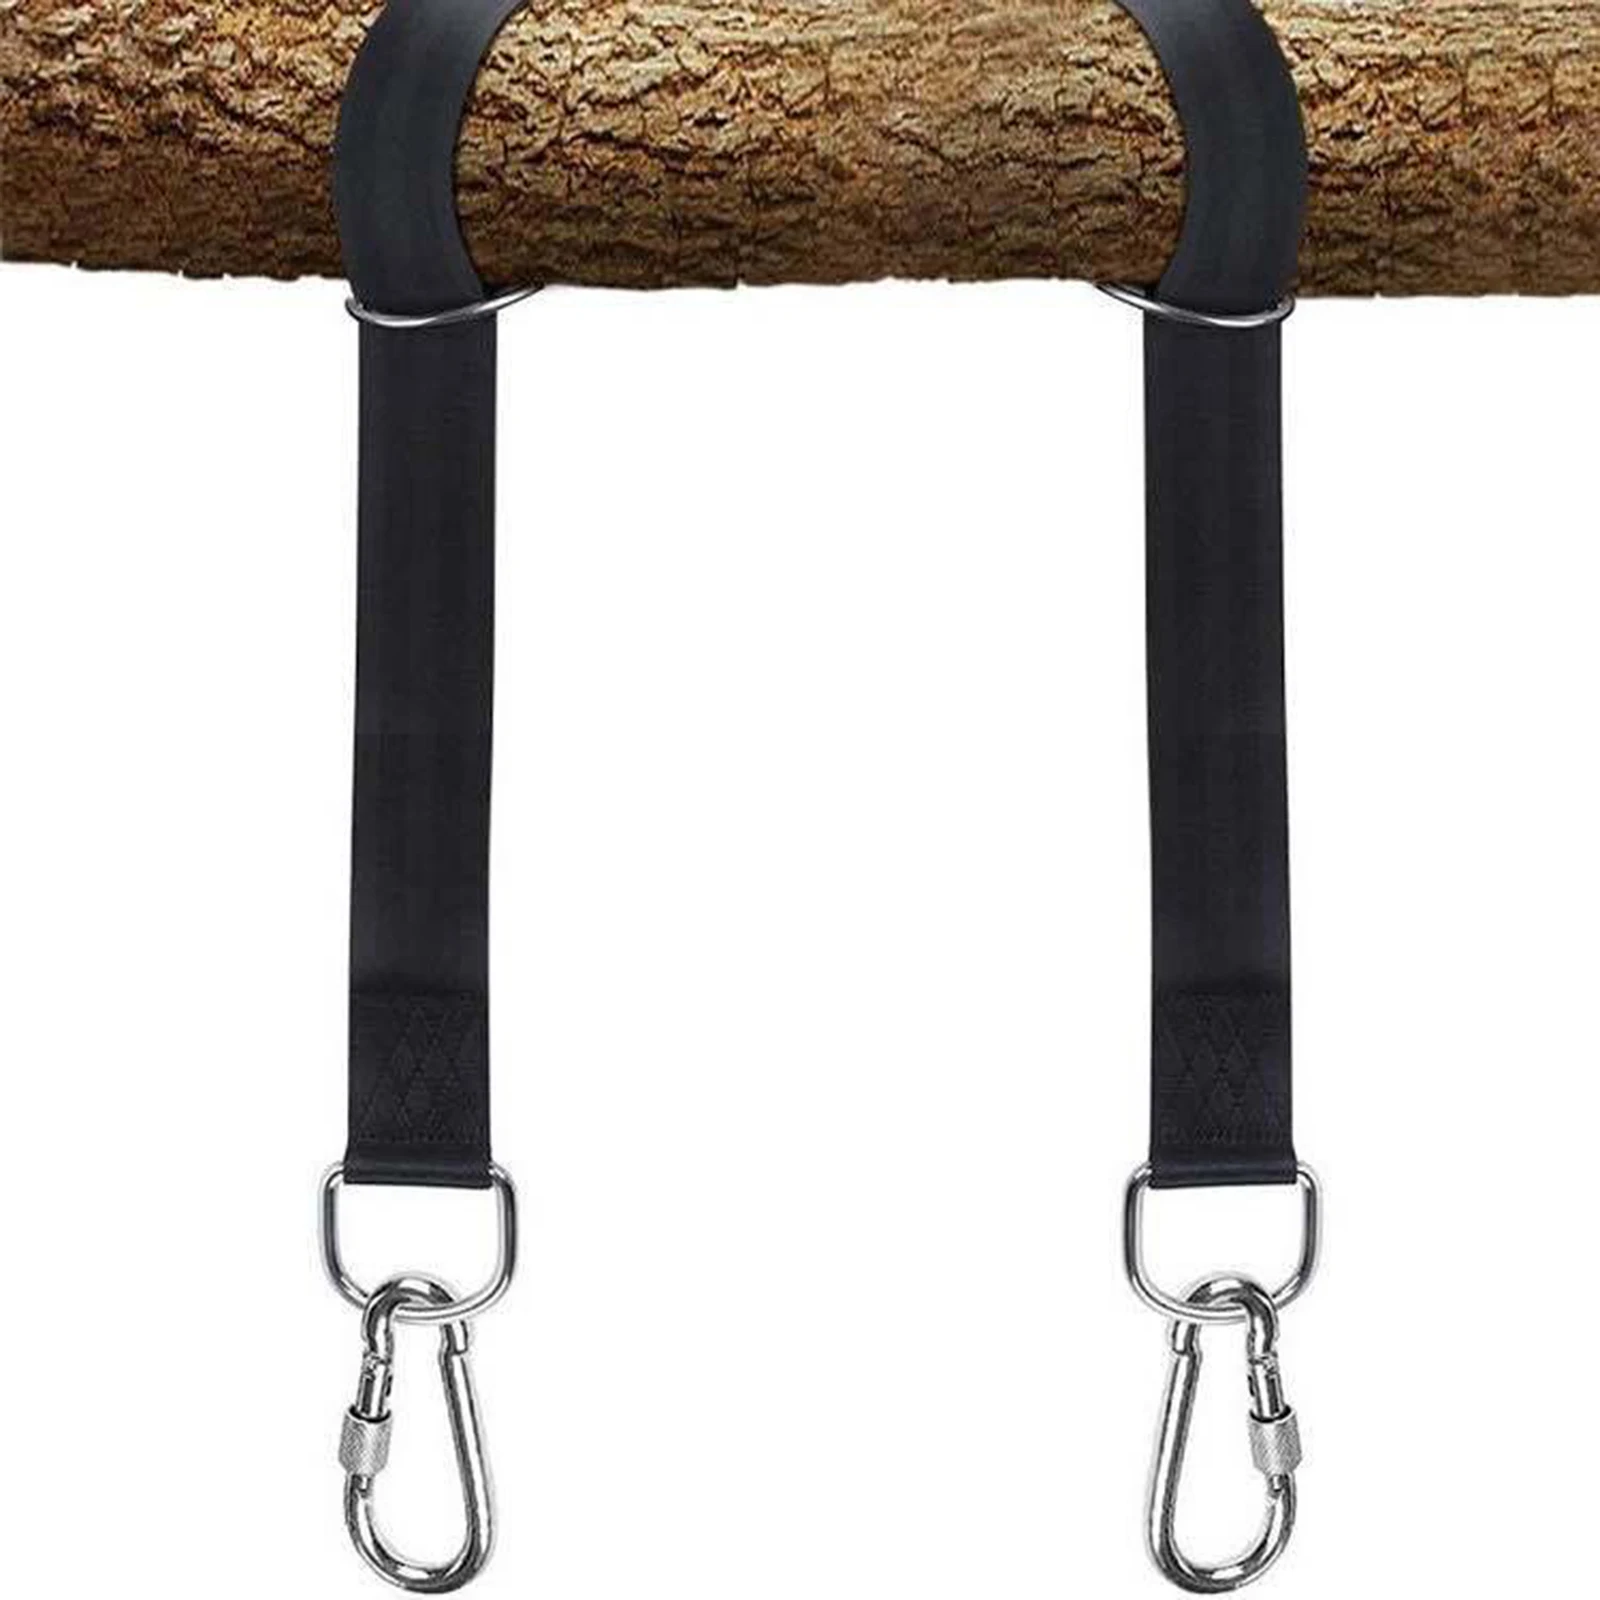 Hammock Swing Chair 360 Hanging Strap Kit Installing Hook Accessories